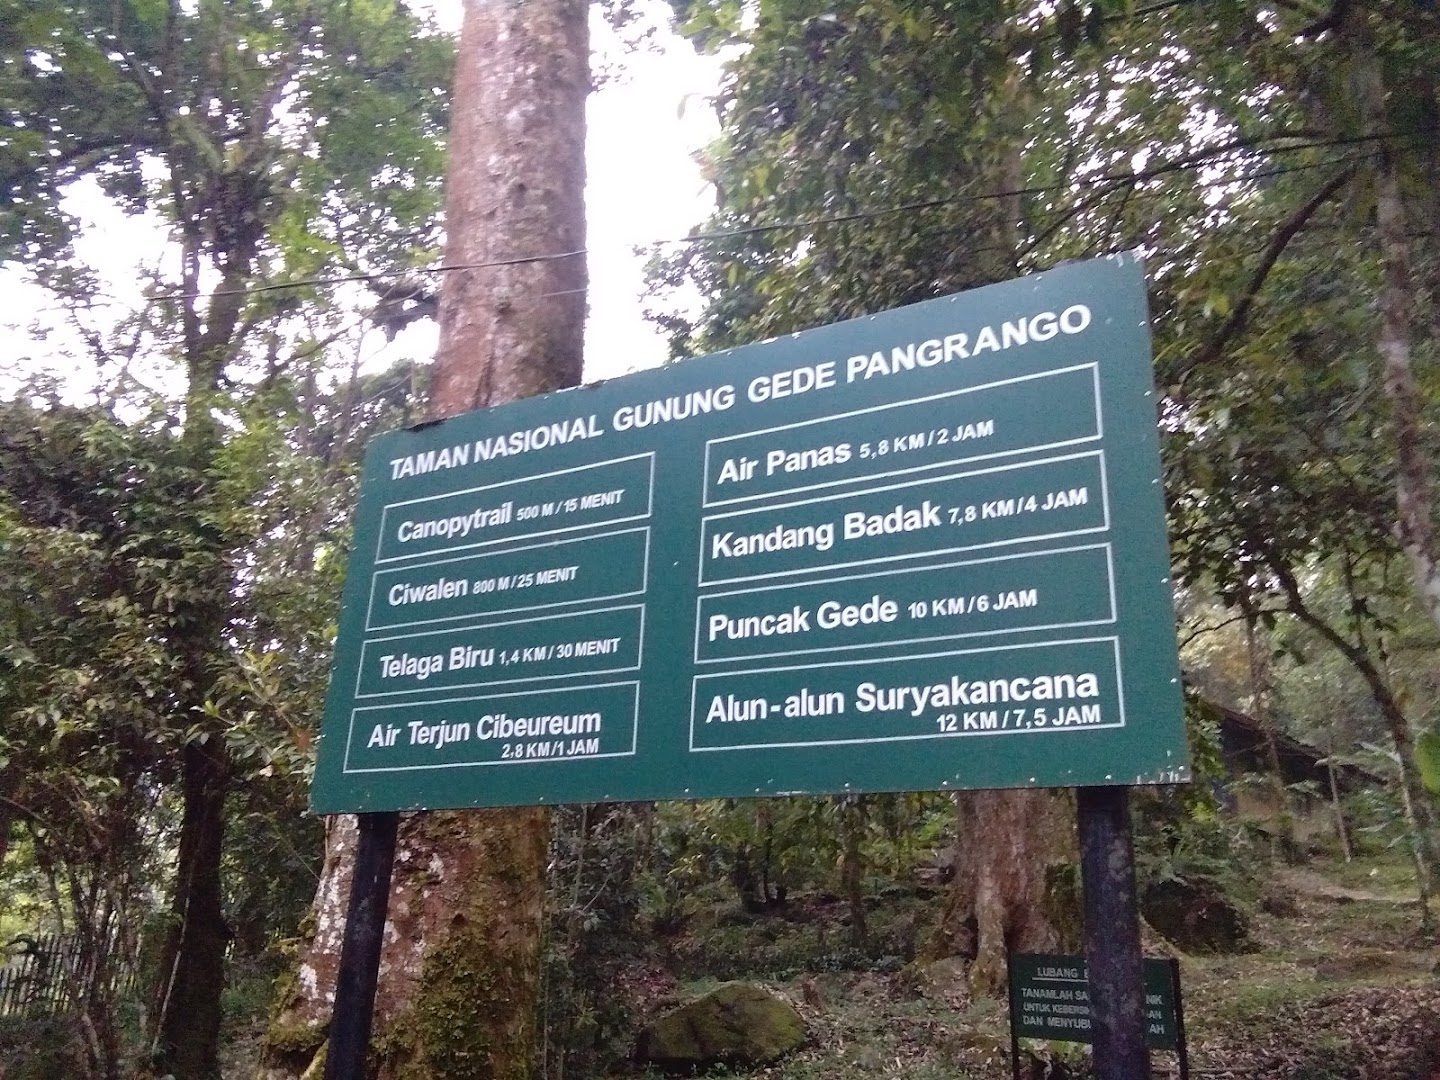 Gambar Taman Nasional Gunung Gede Pangrango